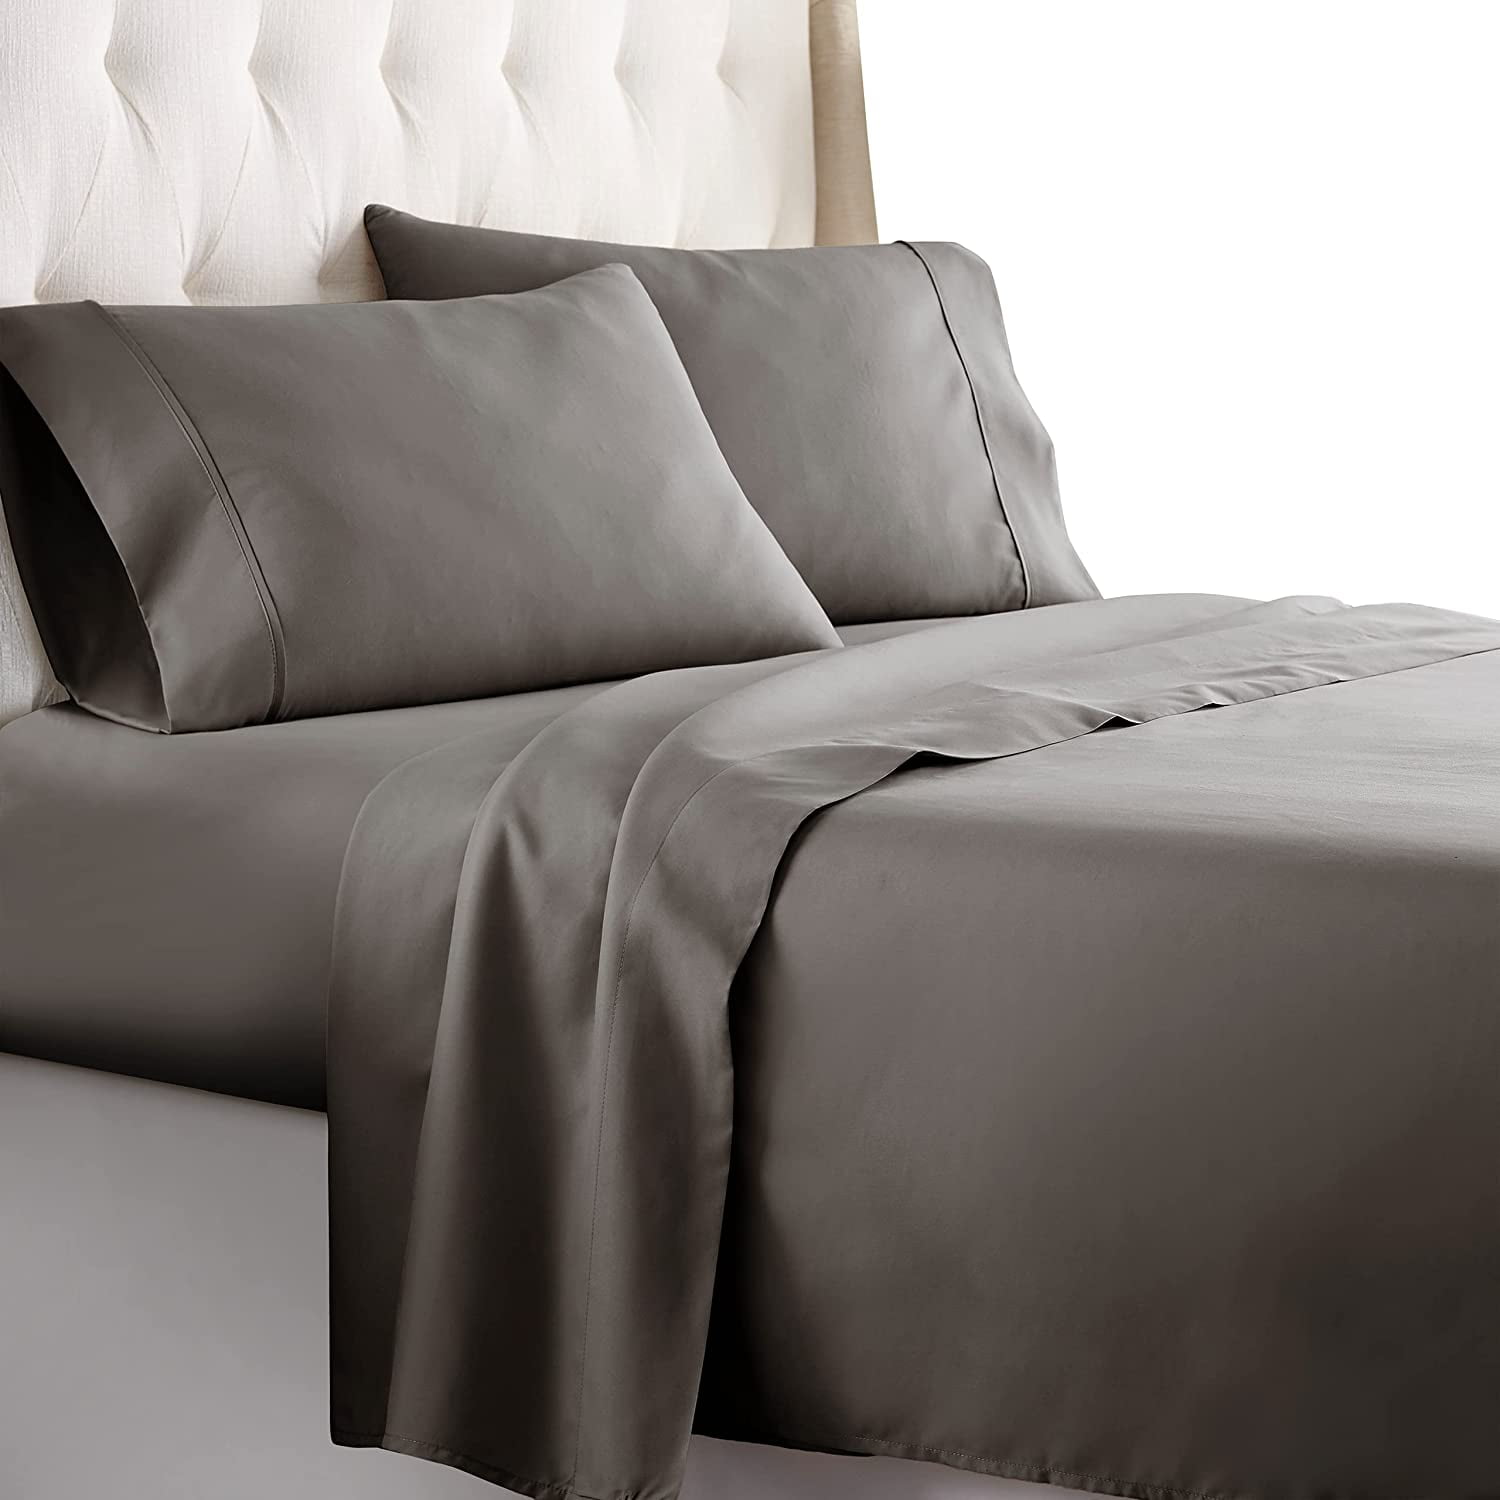 3pcs Bamboo Charcoal Fiber Summer Sheet&Pillowcase Sets Solid Color Bedding 